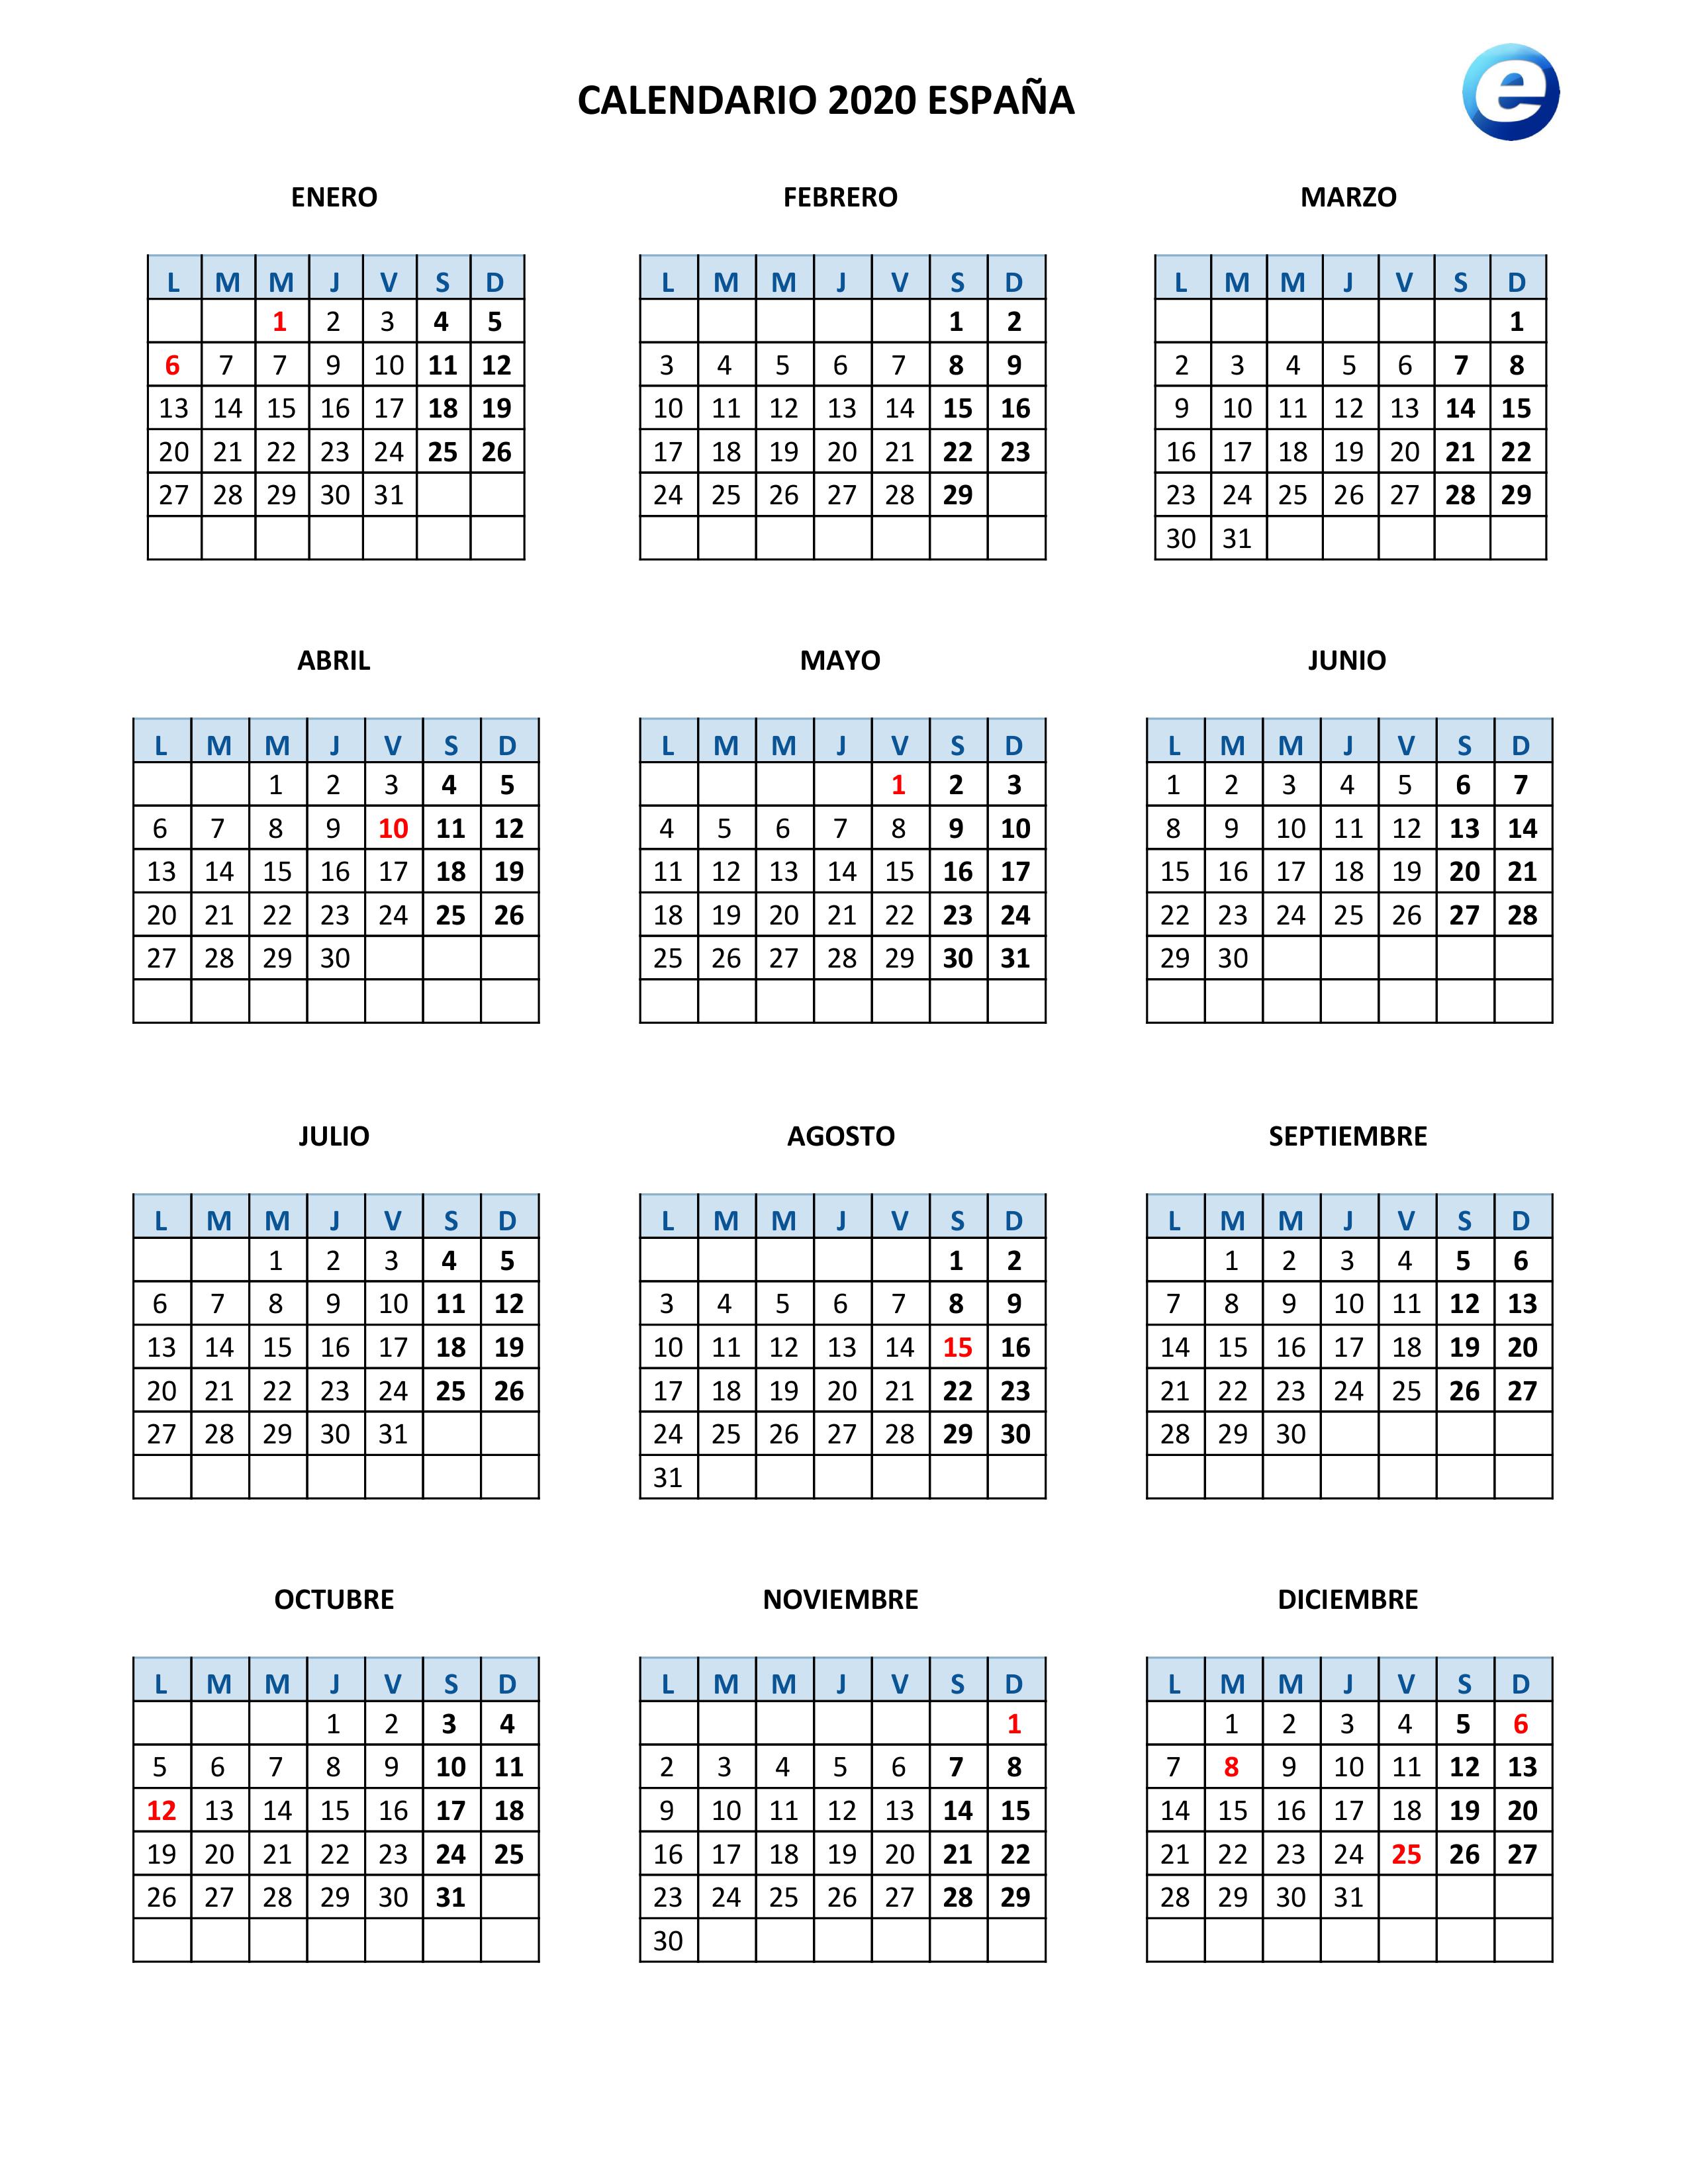 Calendario-Laboral-2020-Espana